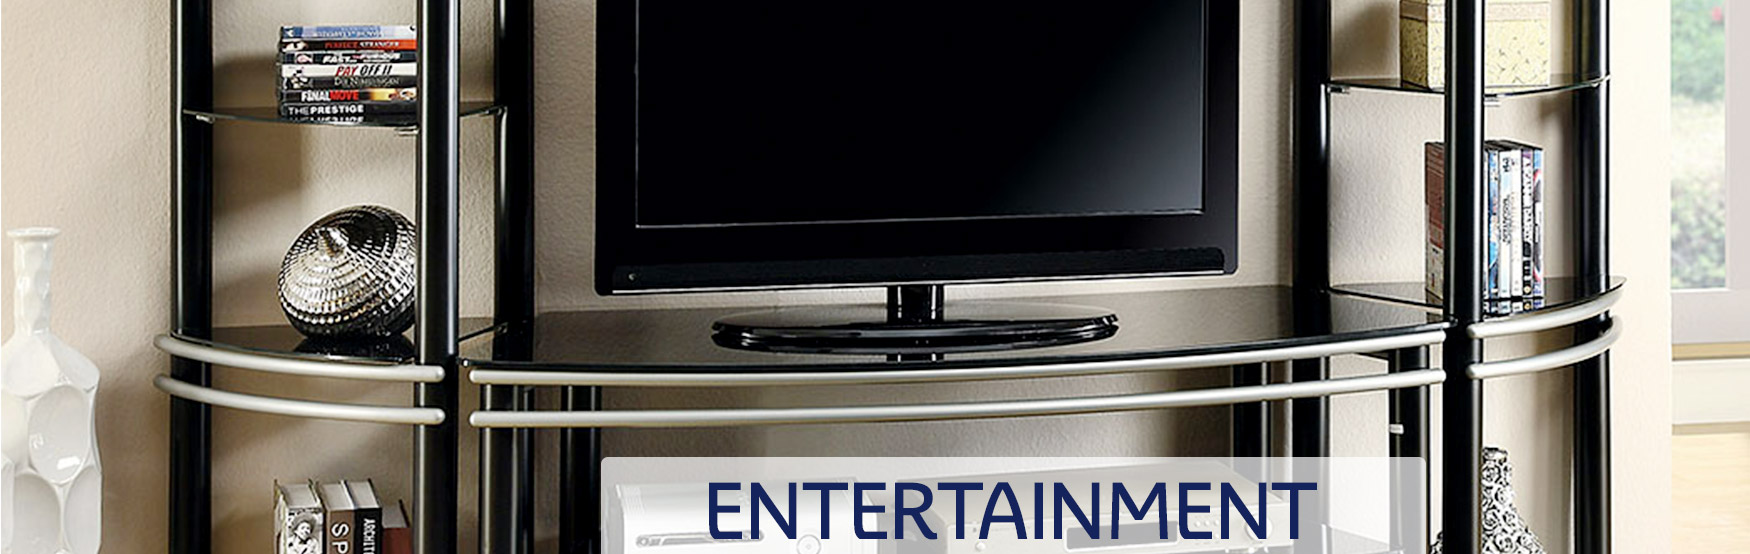 Entertainment Banner